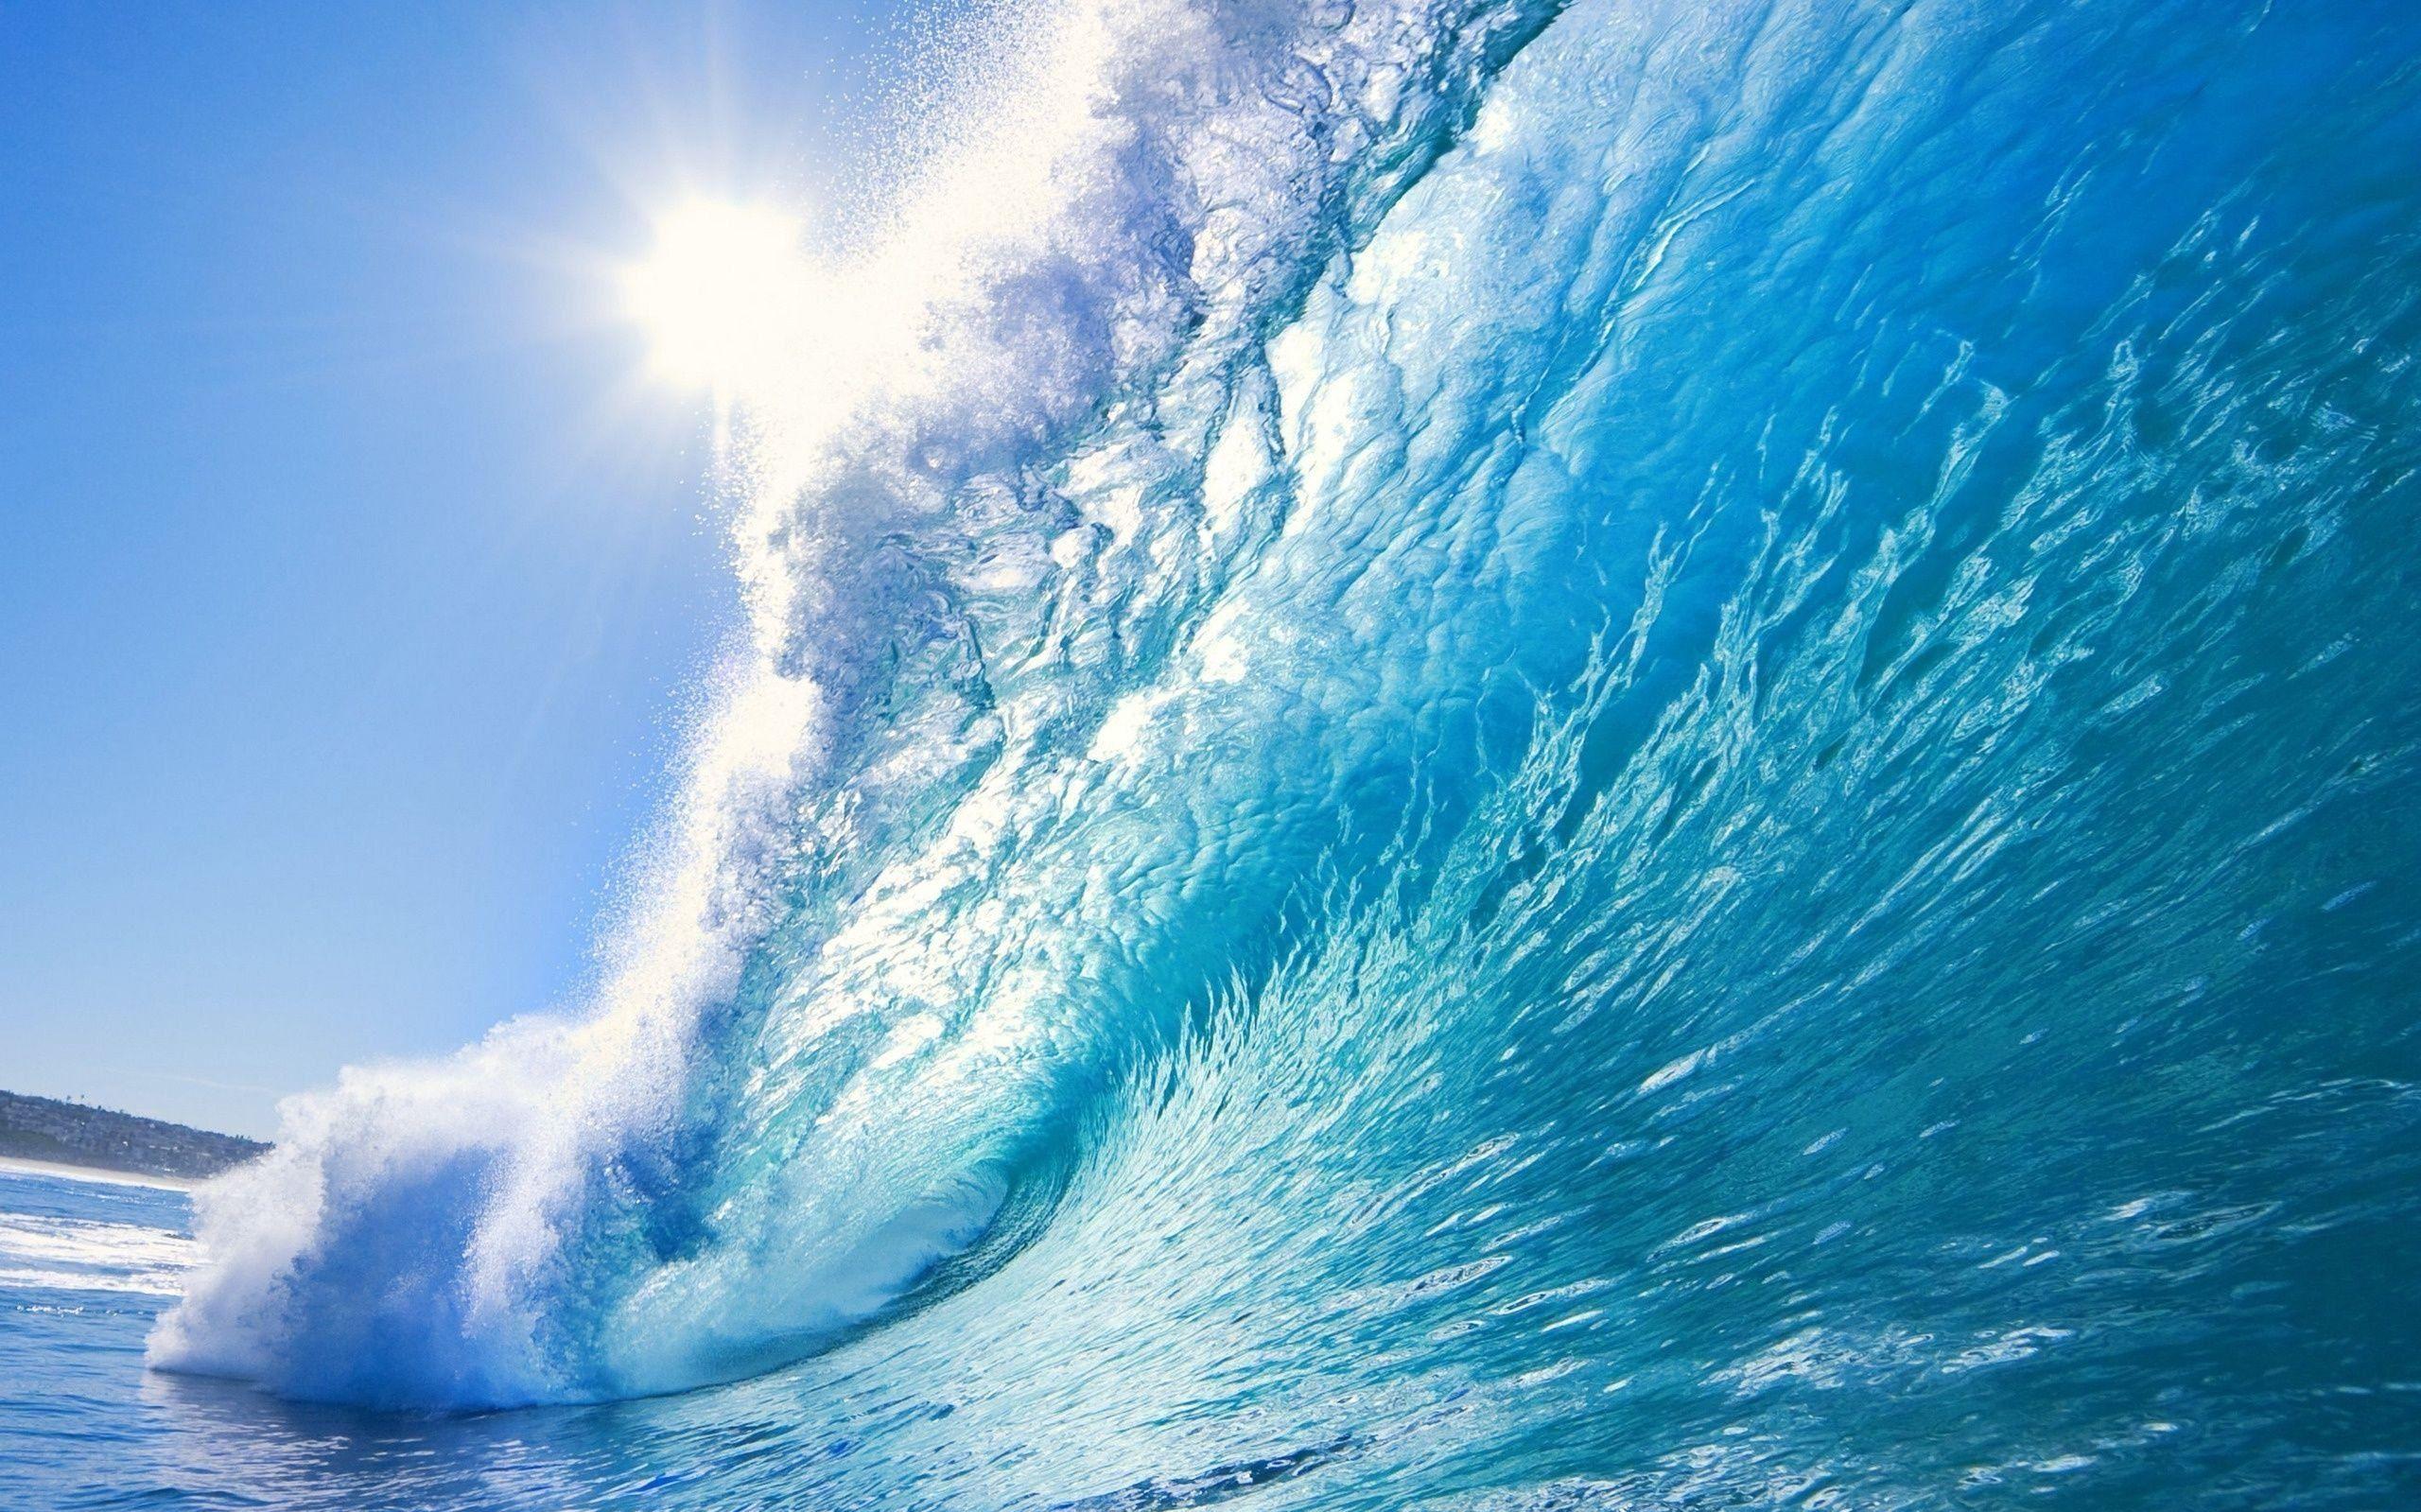 Free download 50 Blue Ocean Desktop Wallpapers Download at